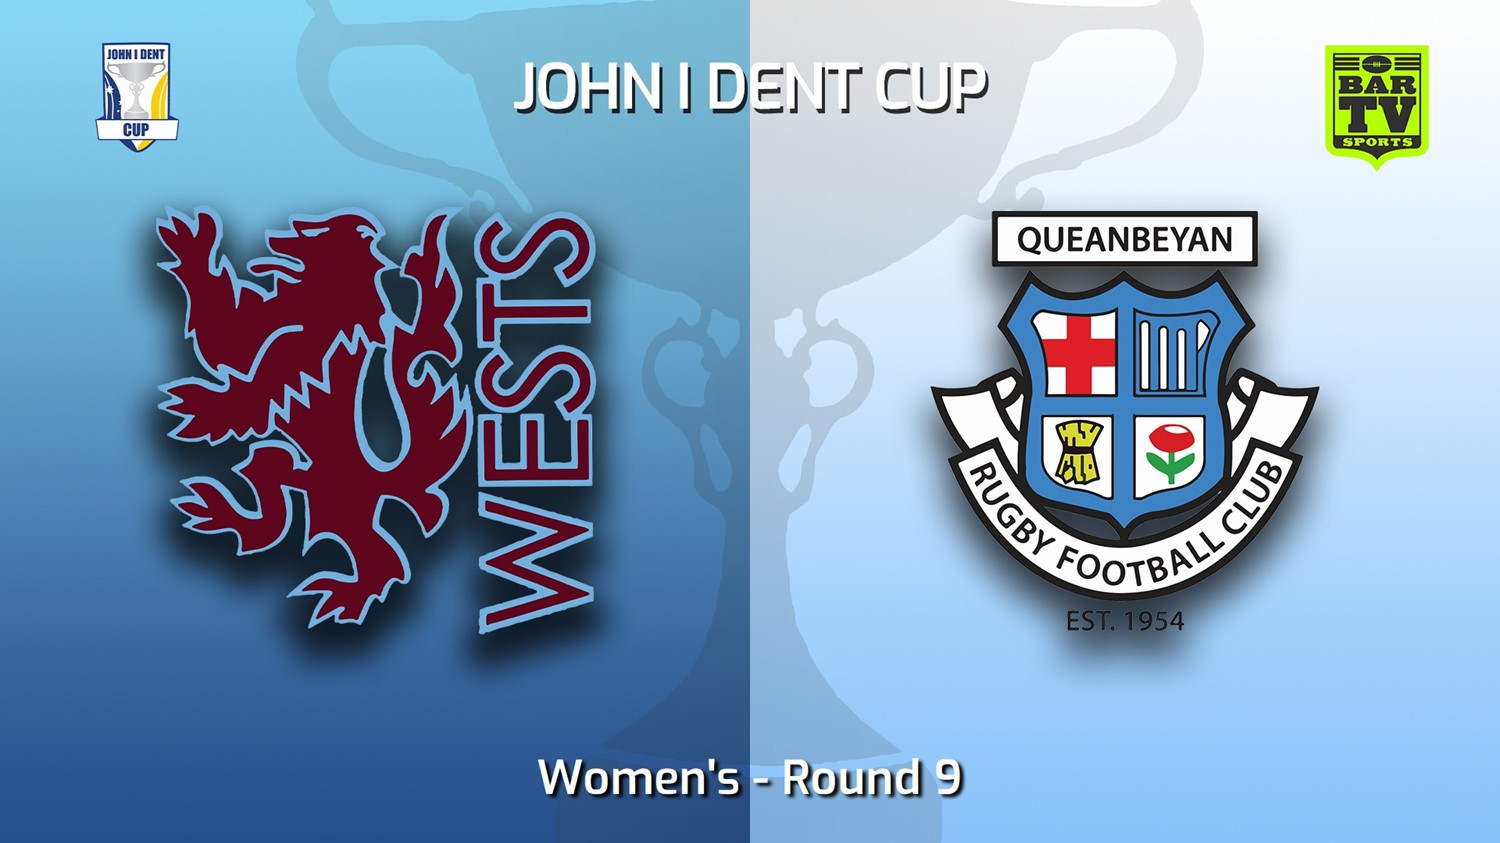 220625-John I Dent (ACT) Round 9 - Women's - Wests Lions v Queanbeyan Whites Slate Image